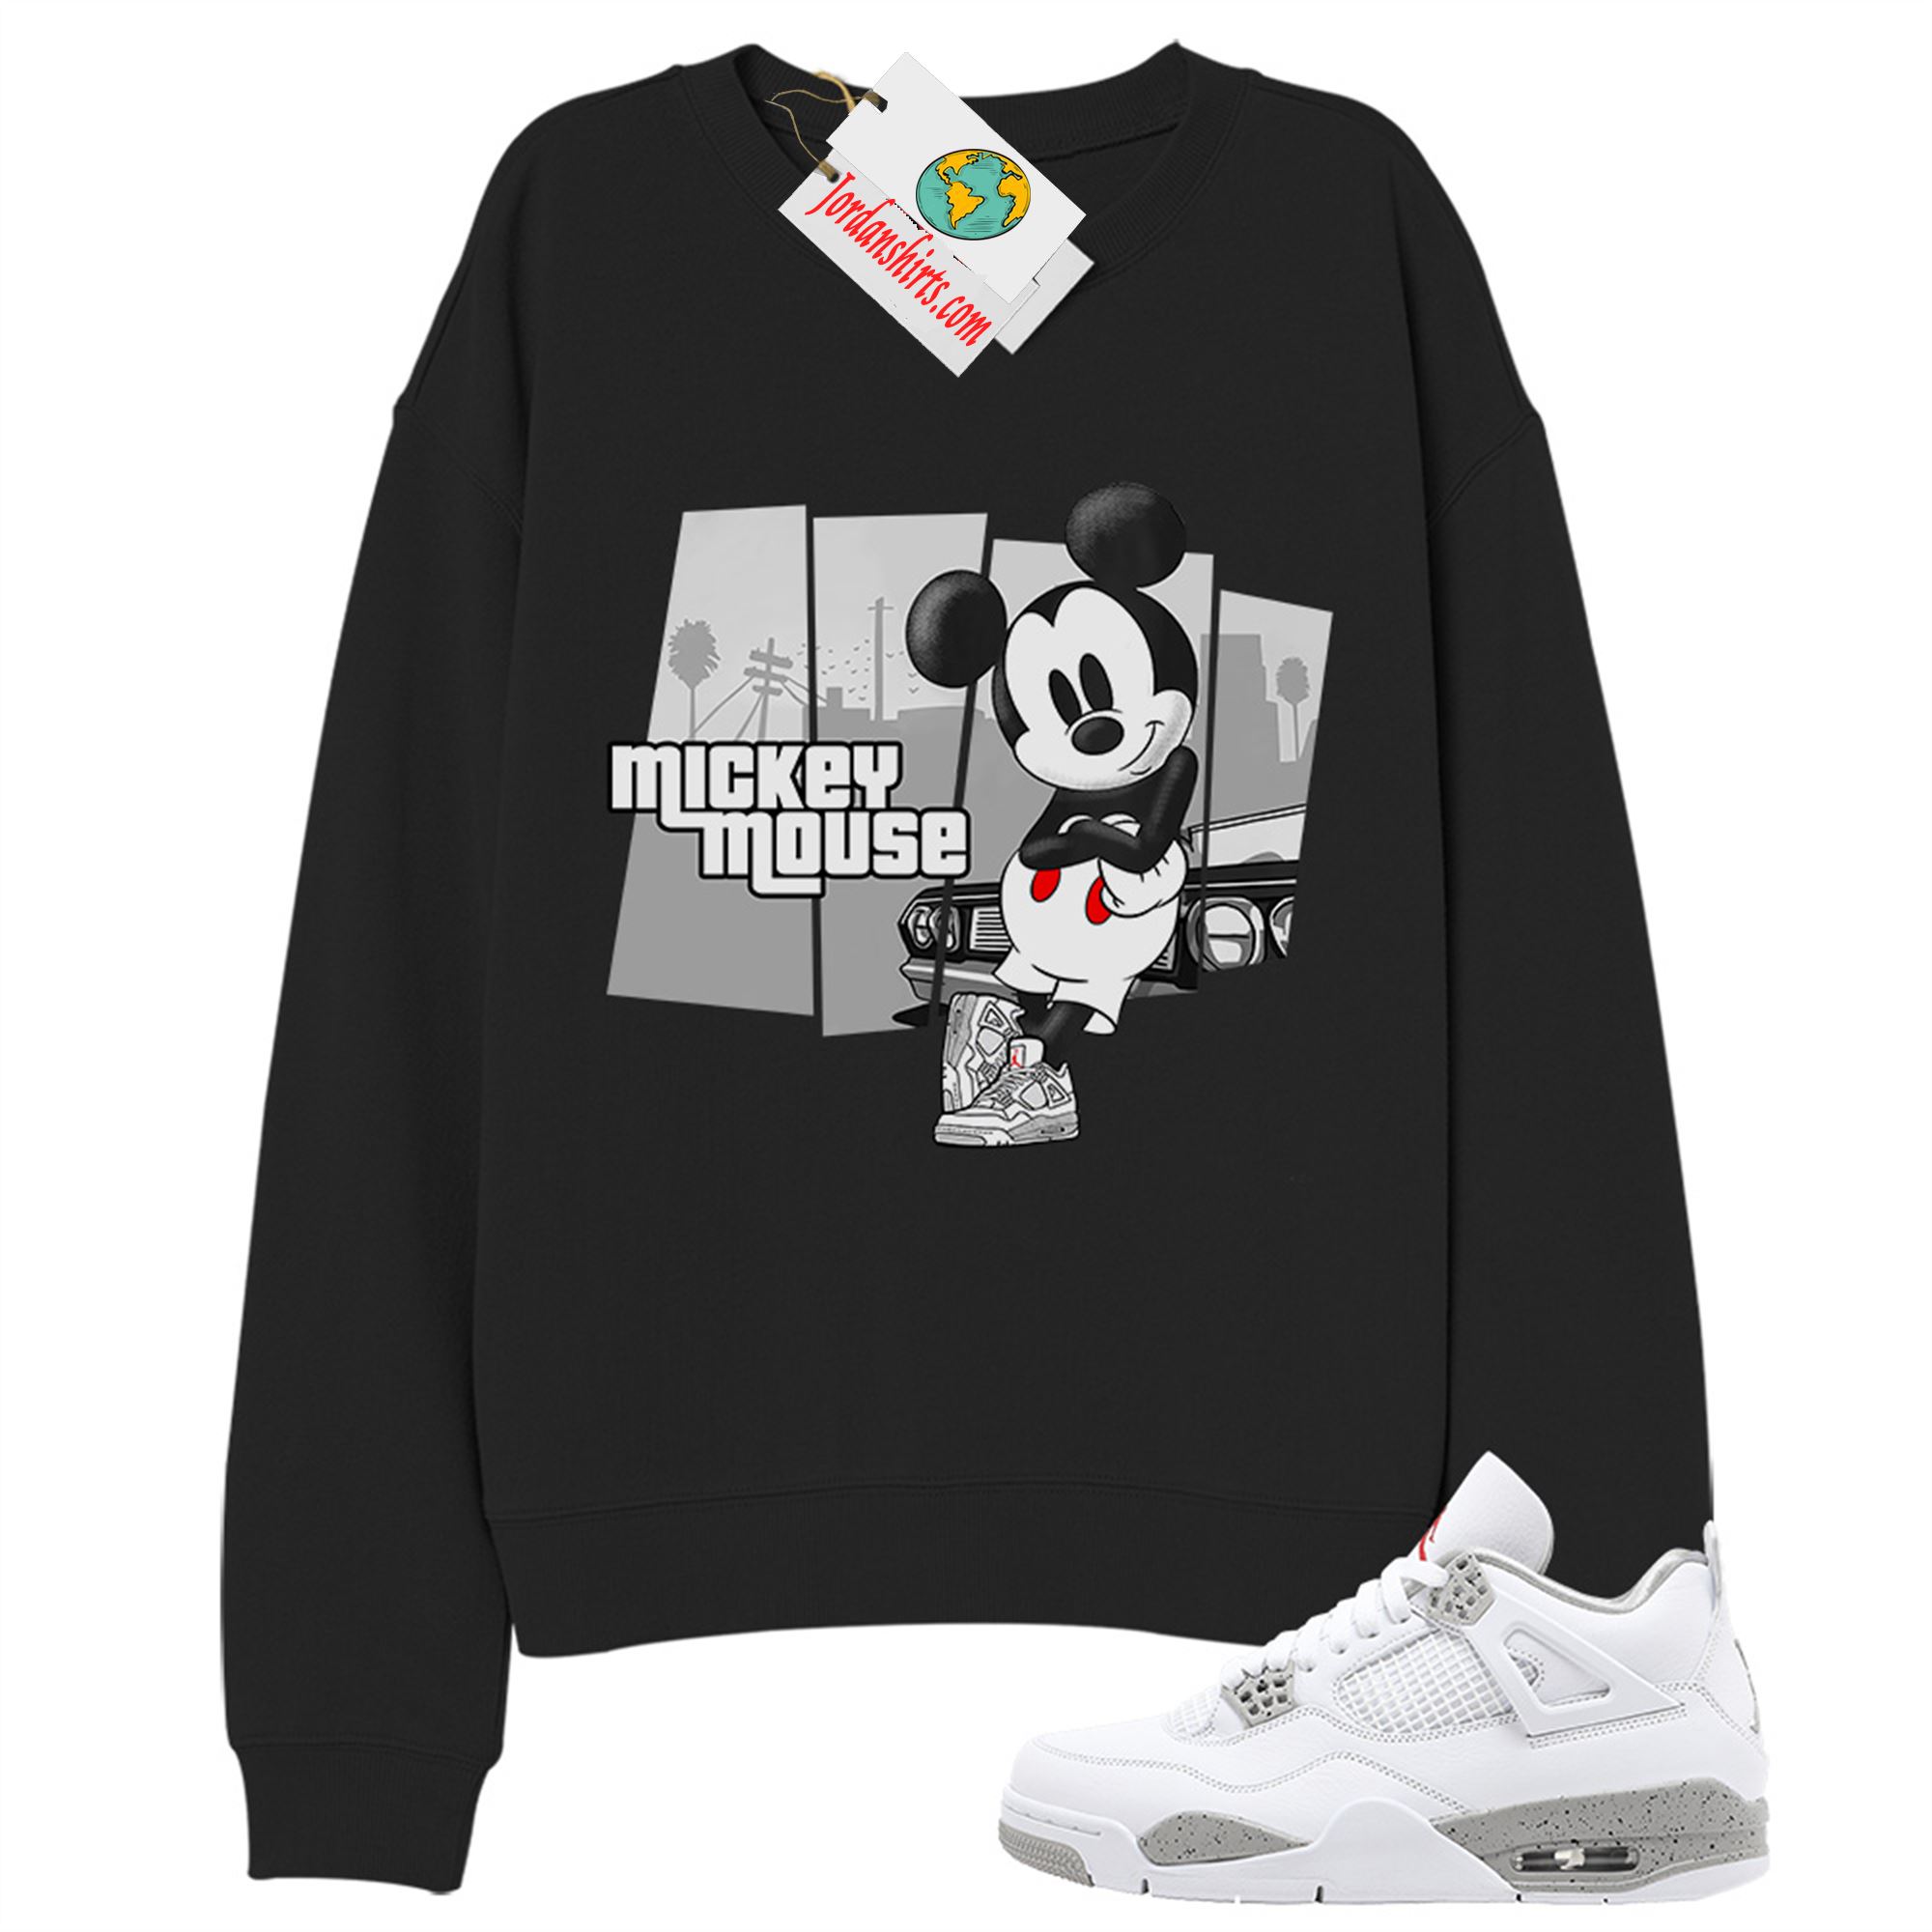 Jordan 4 Sweatshirt, Mickey Gta Black Sweatshirt Air Jordan 4 White Oreo 4s Plus Size Up To 5xl